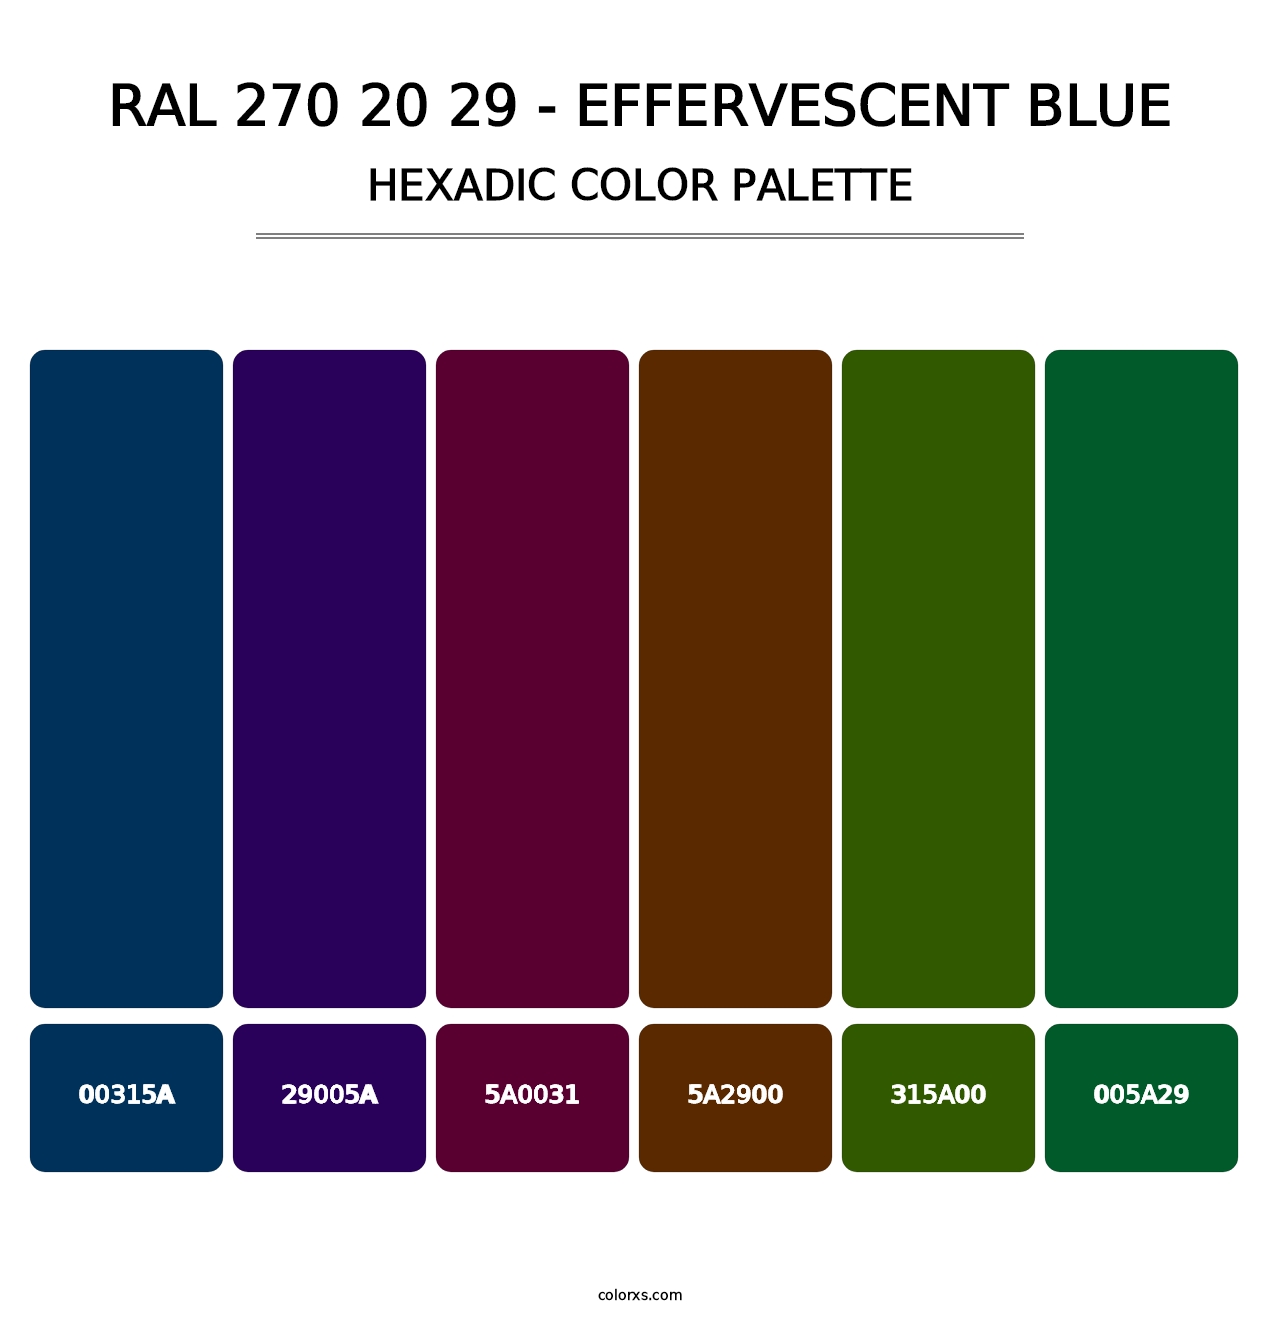 RAL 270 20 29 - Effervescent Blue - Hexadic Color Palette